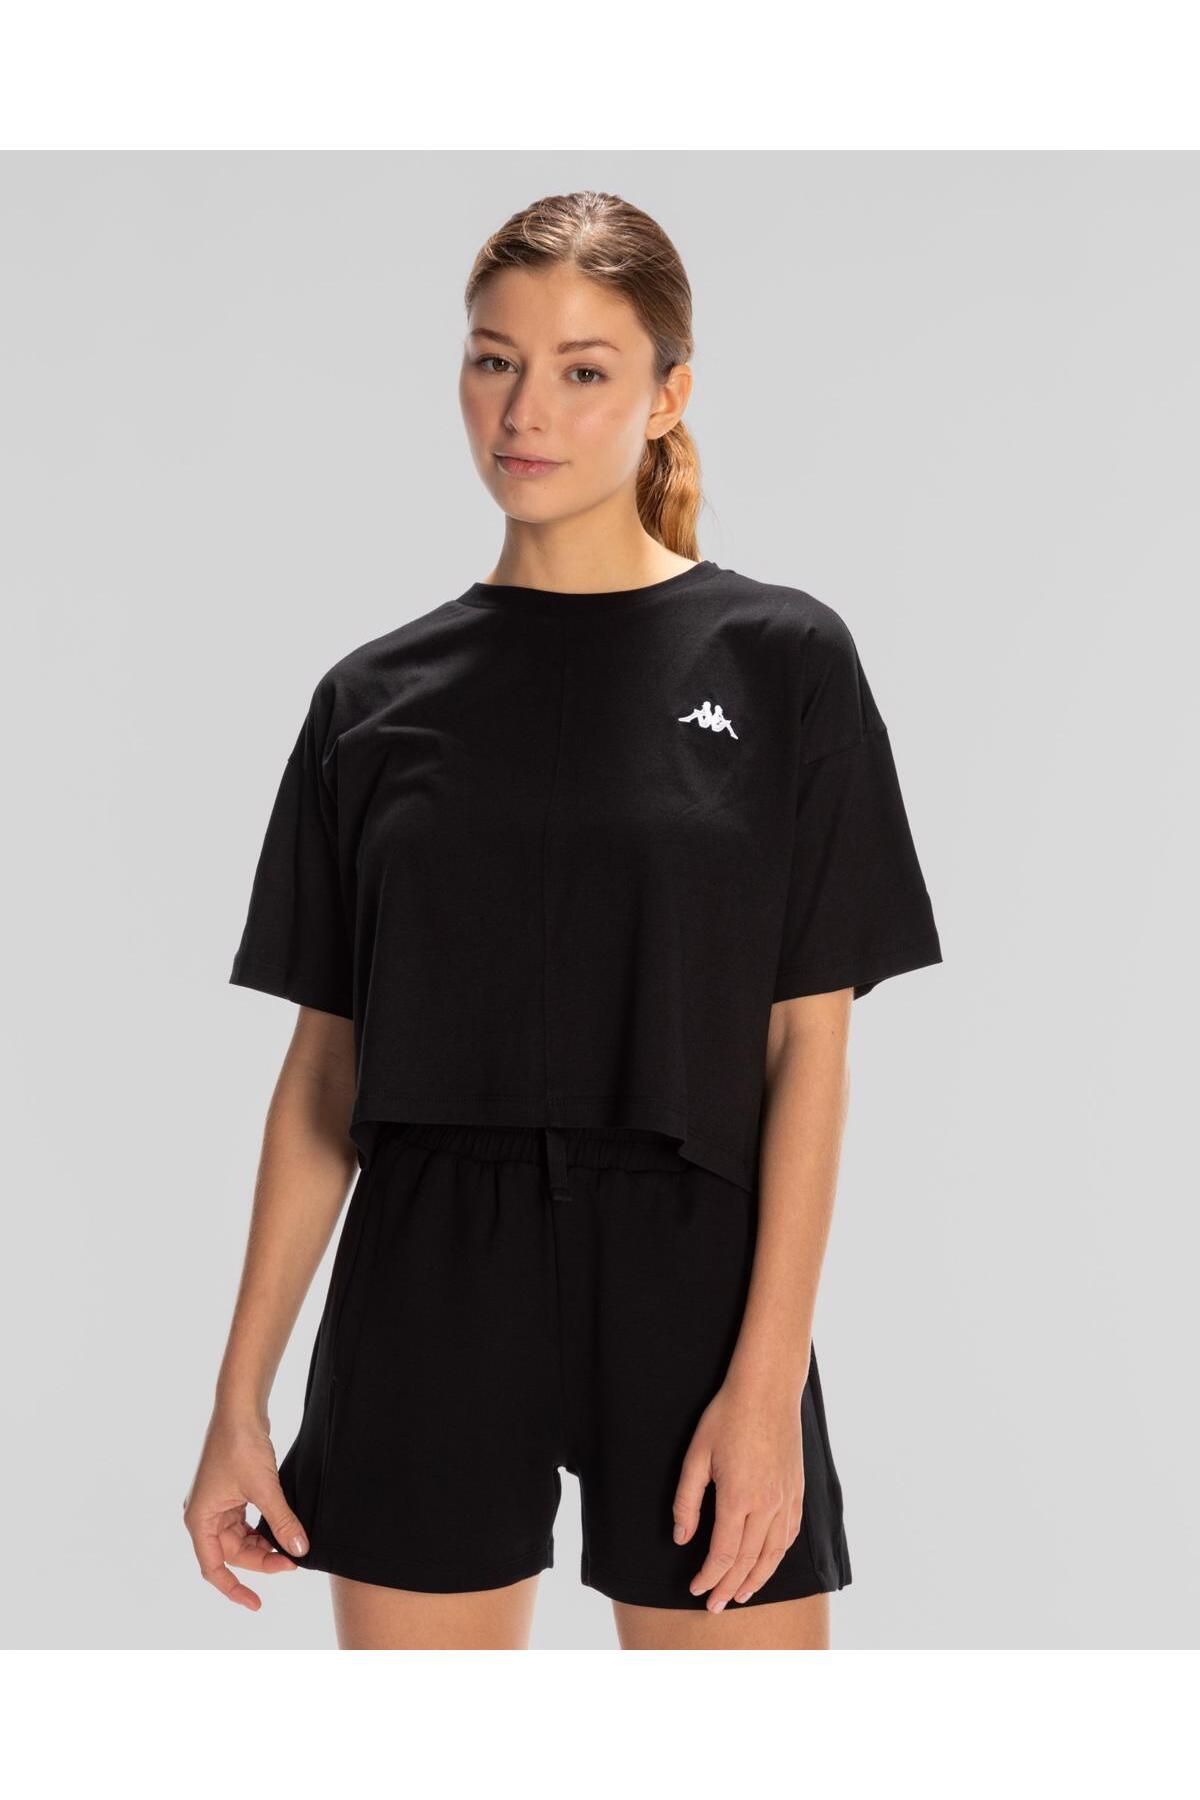 Kappa Authentic Sylia T-shirt Kadın Siyah Oversize Fit Tişört